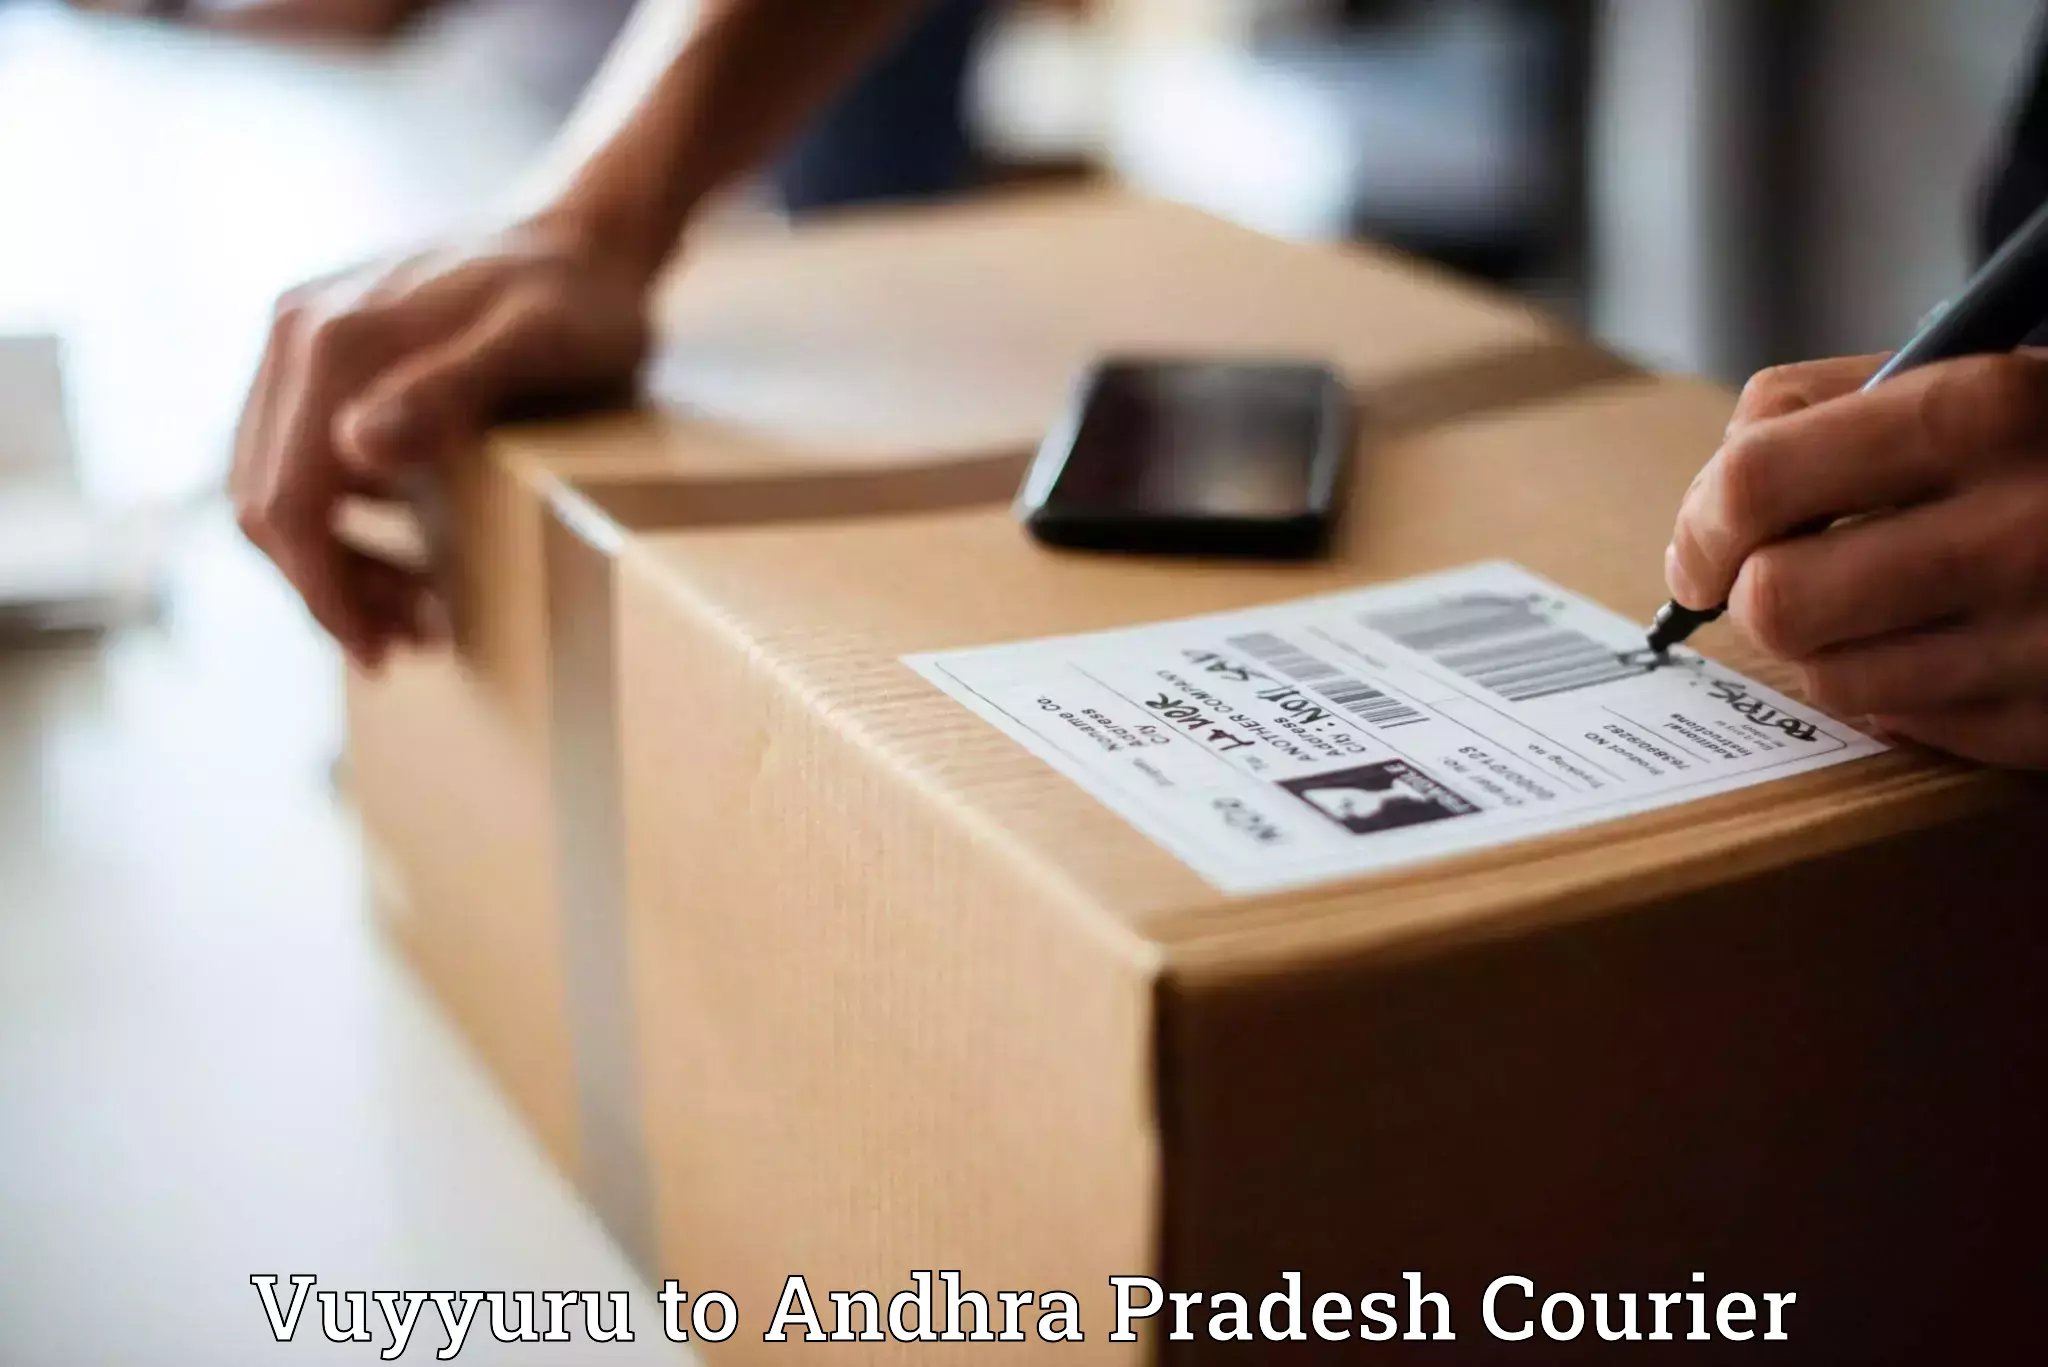 Courier service booking Vuyyuru to Tirupati